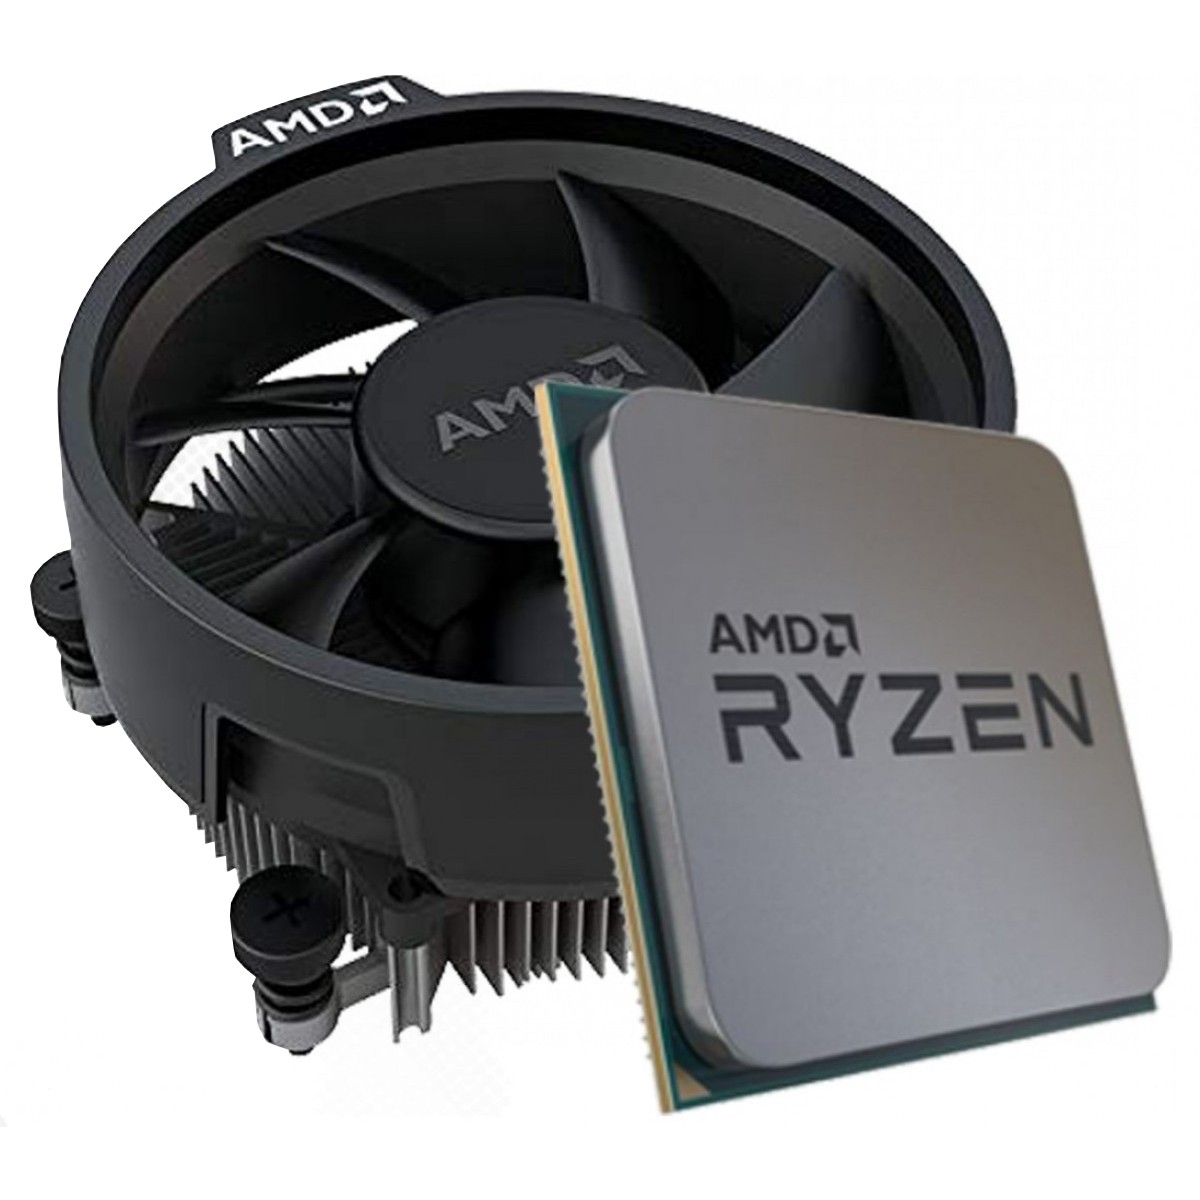 Processador AMD Ryzen 5 3500 3.6GHz (4.1GHz Turbo), 6-Cores 6-Threads, Cooler Wraith Stealth, AM4, 100-100000050MPK, Sem Video, Sem Caixa Comercial